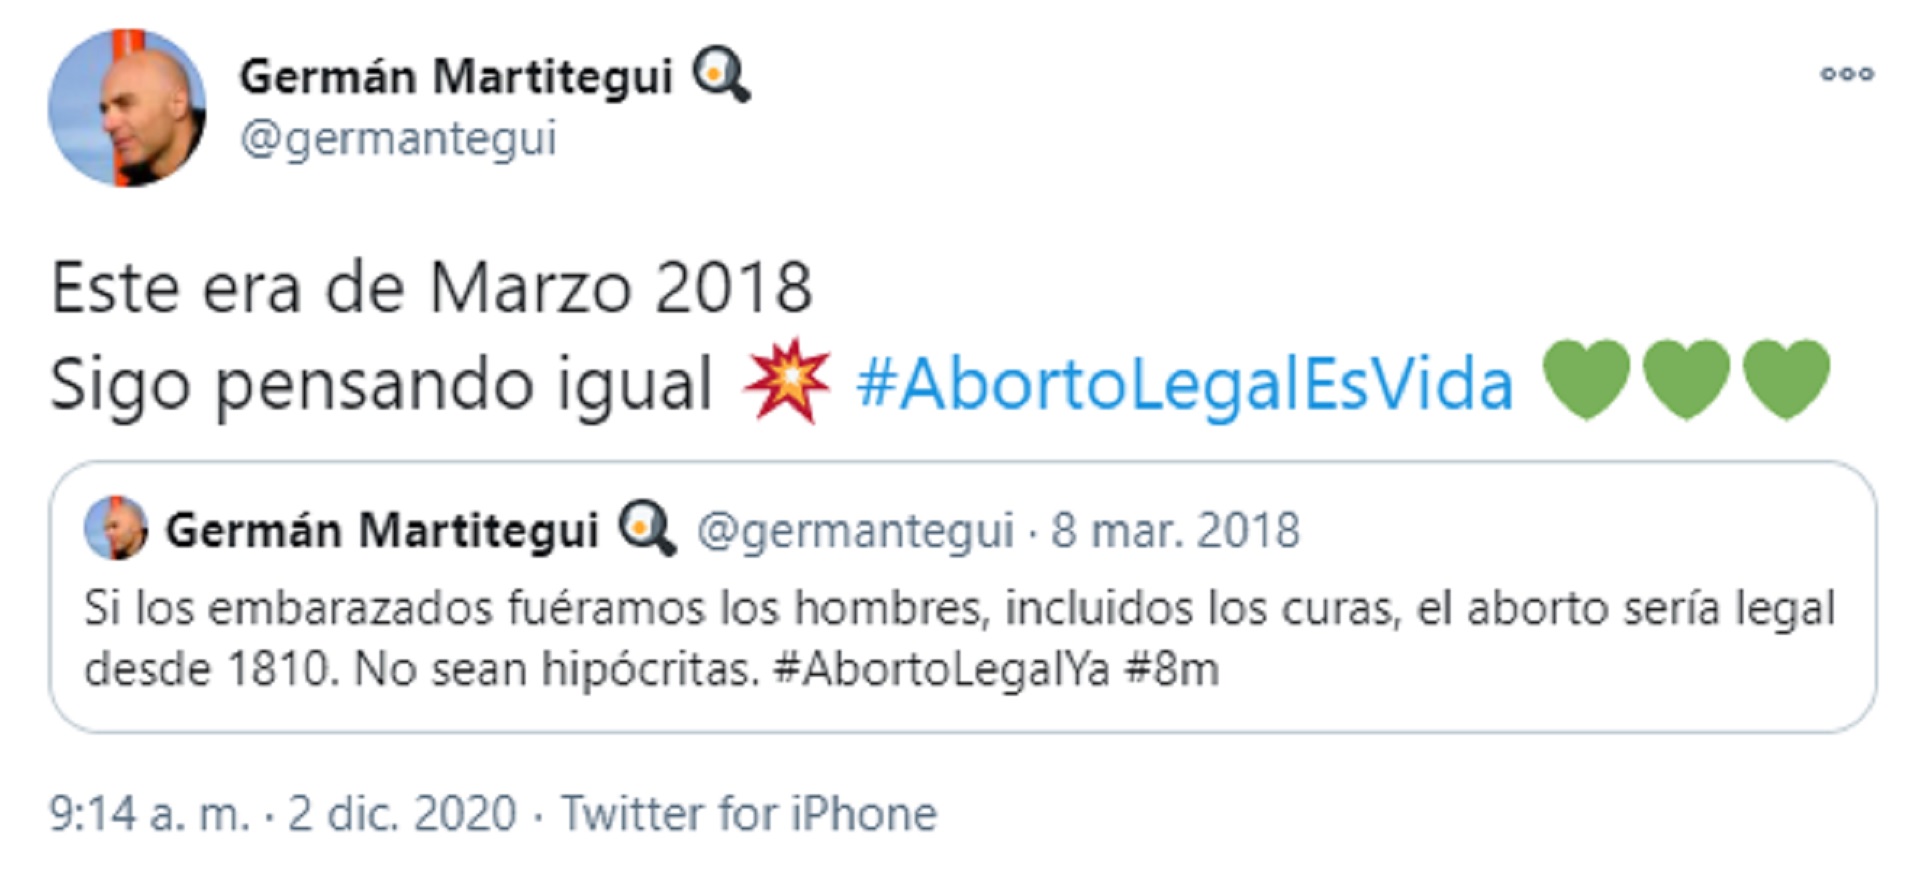 El tuit de Germán Martitegui